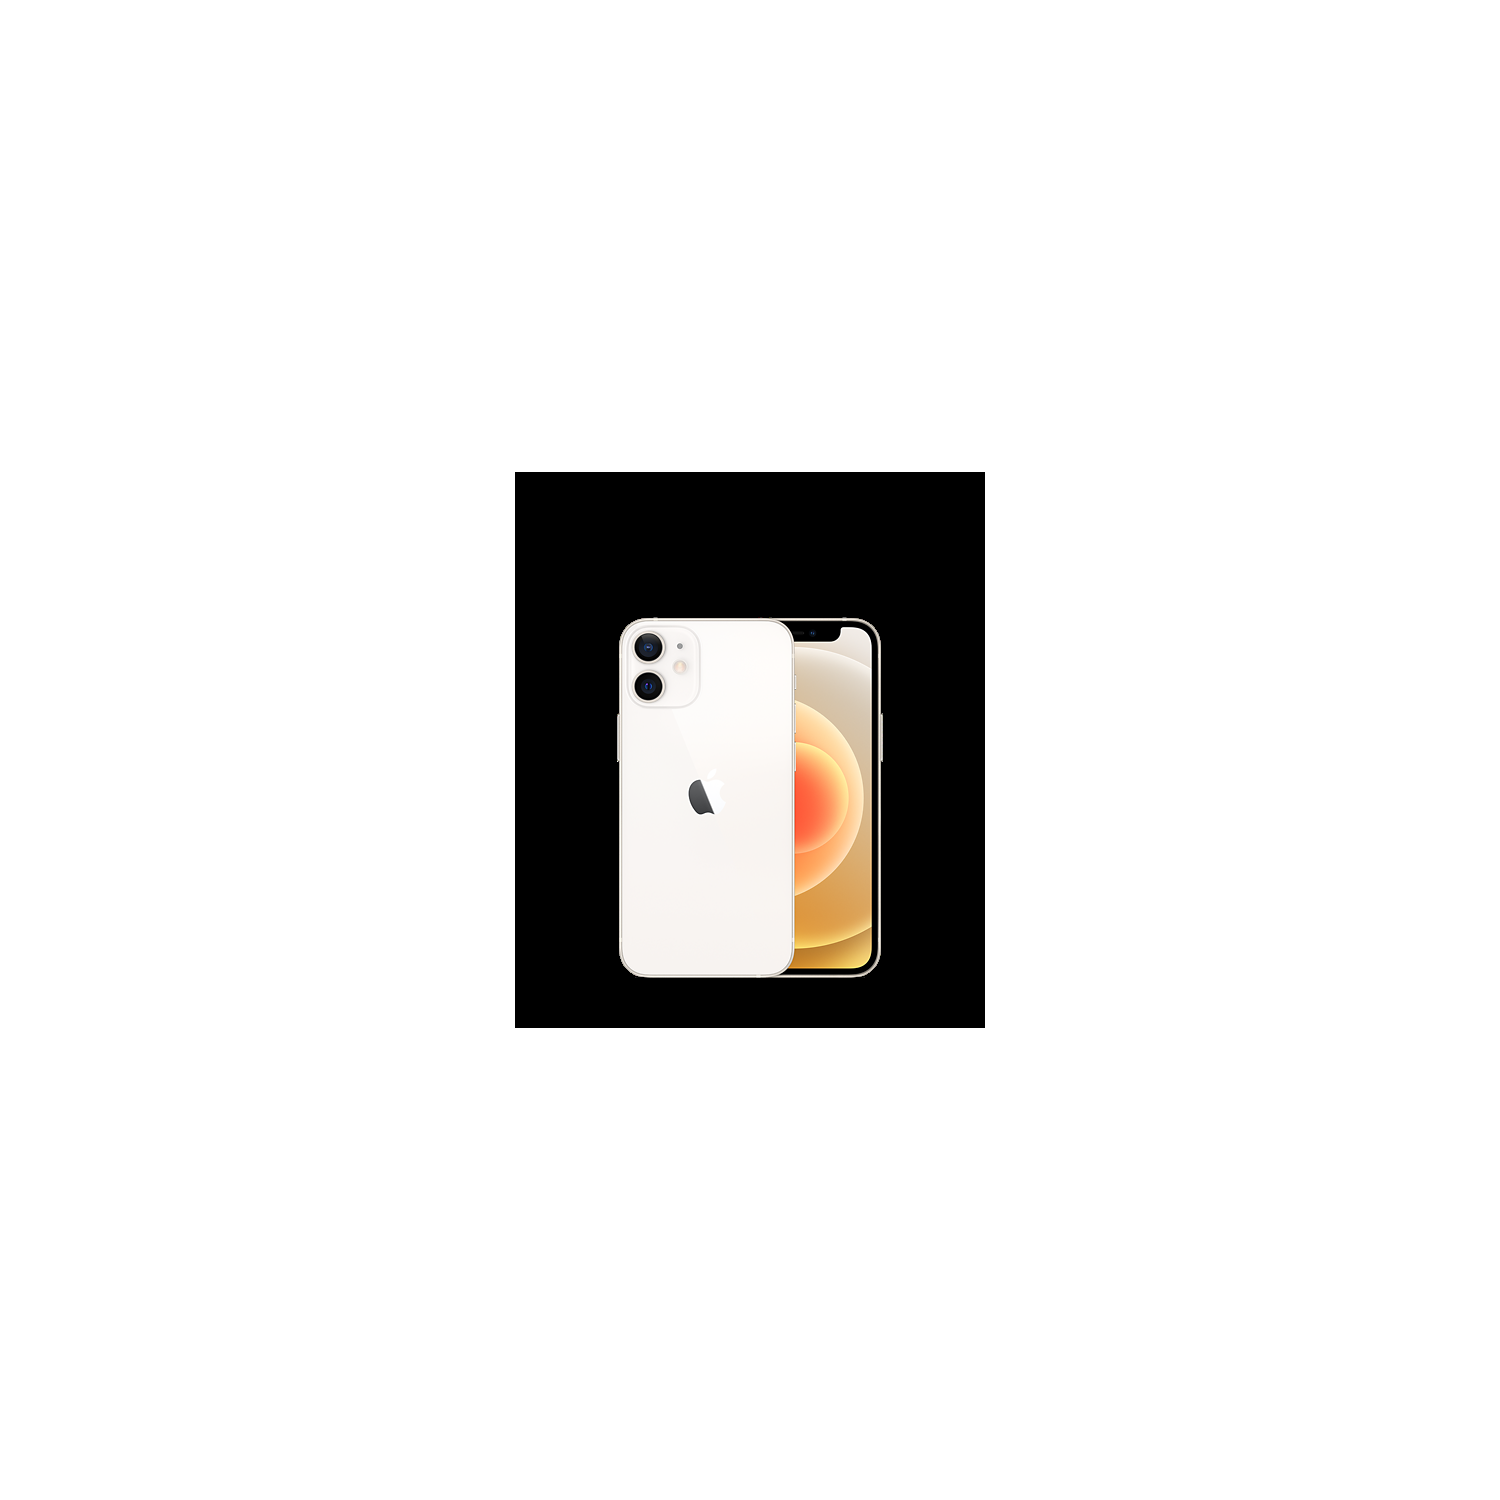 Refurbished (Good) - Apple iPhone 12 mini 128GB Smartphone - White - Unlocked